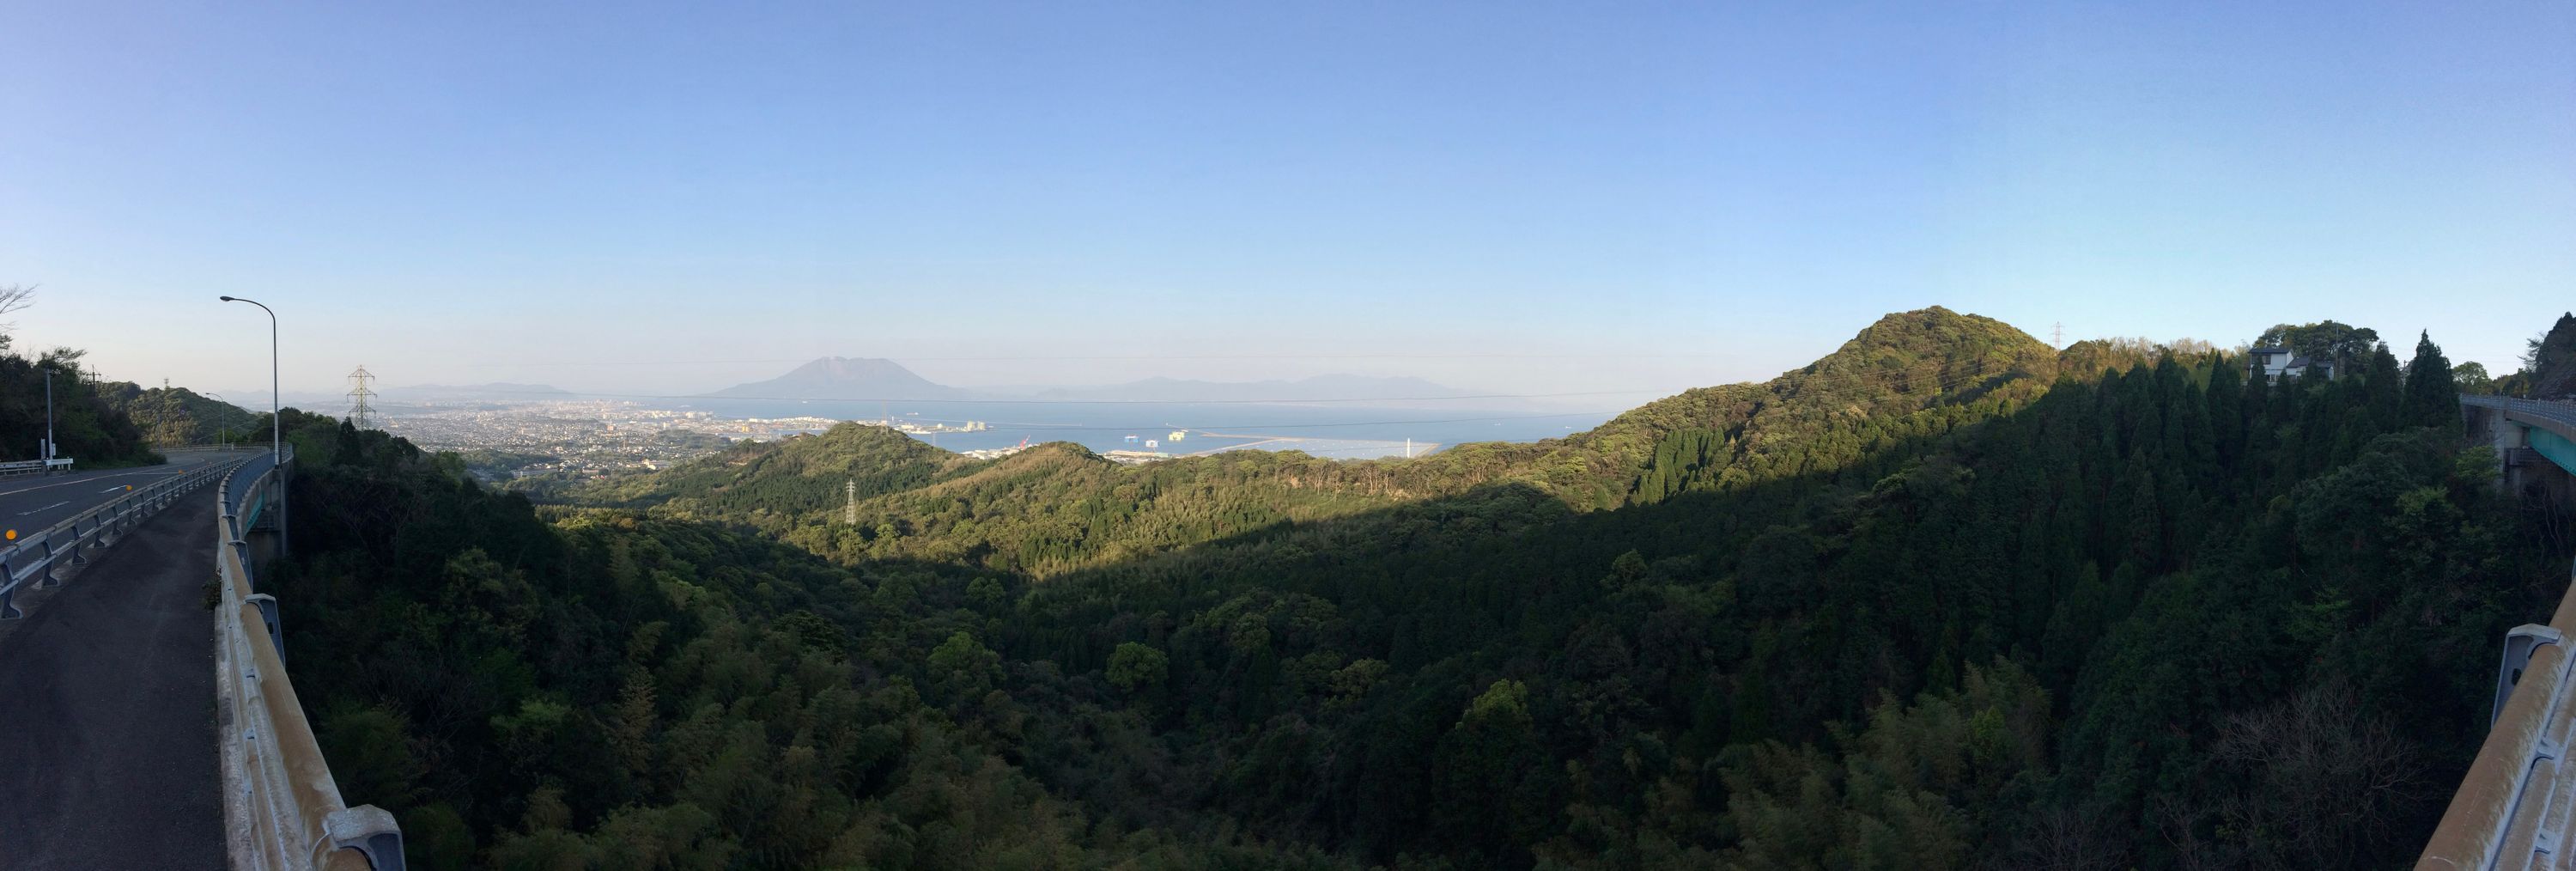 View over Kagoshima Bay from Hirakawa, Kagoshima City. Photo: Peter Orosz